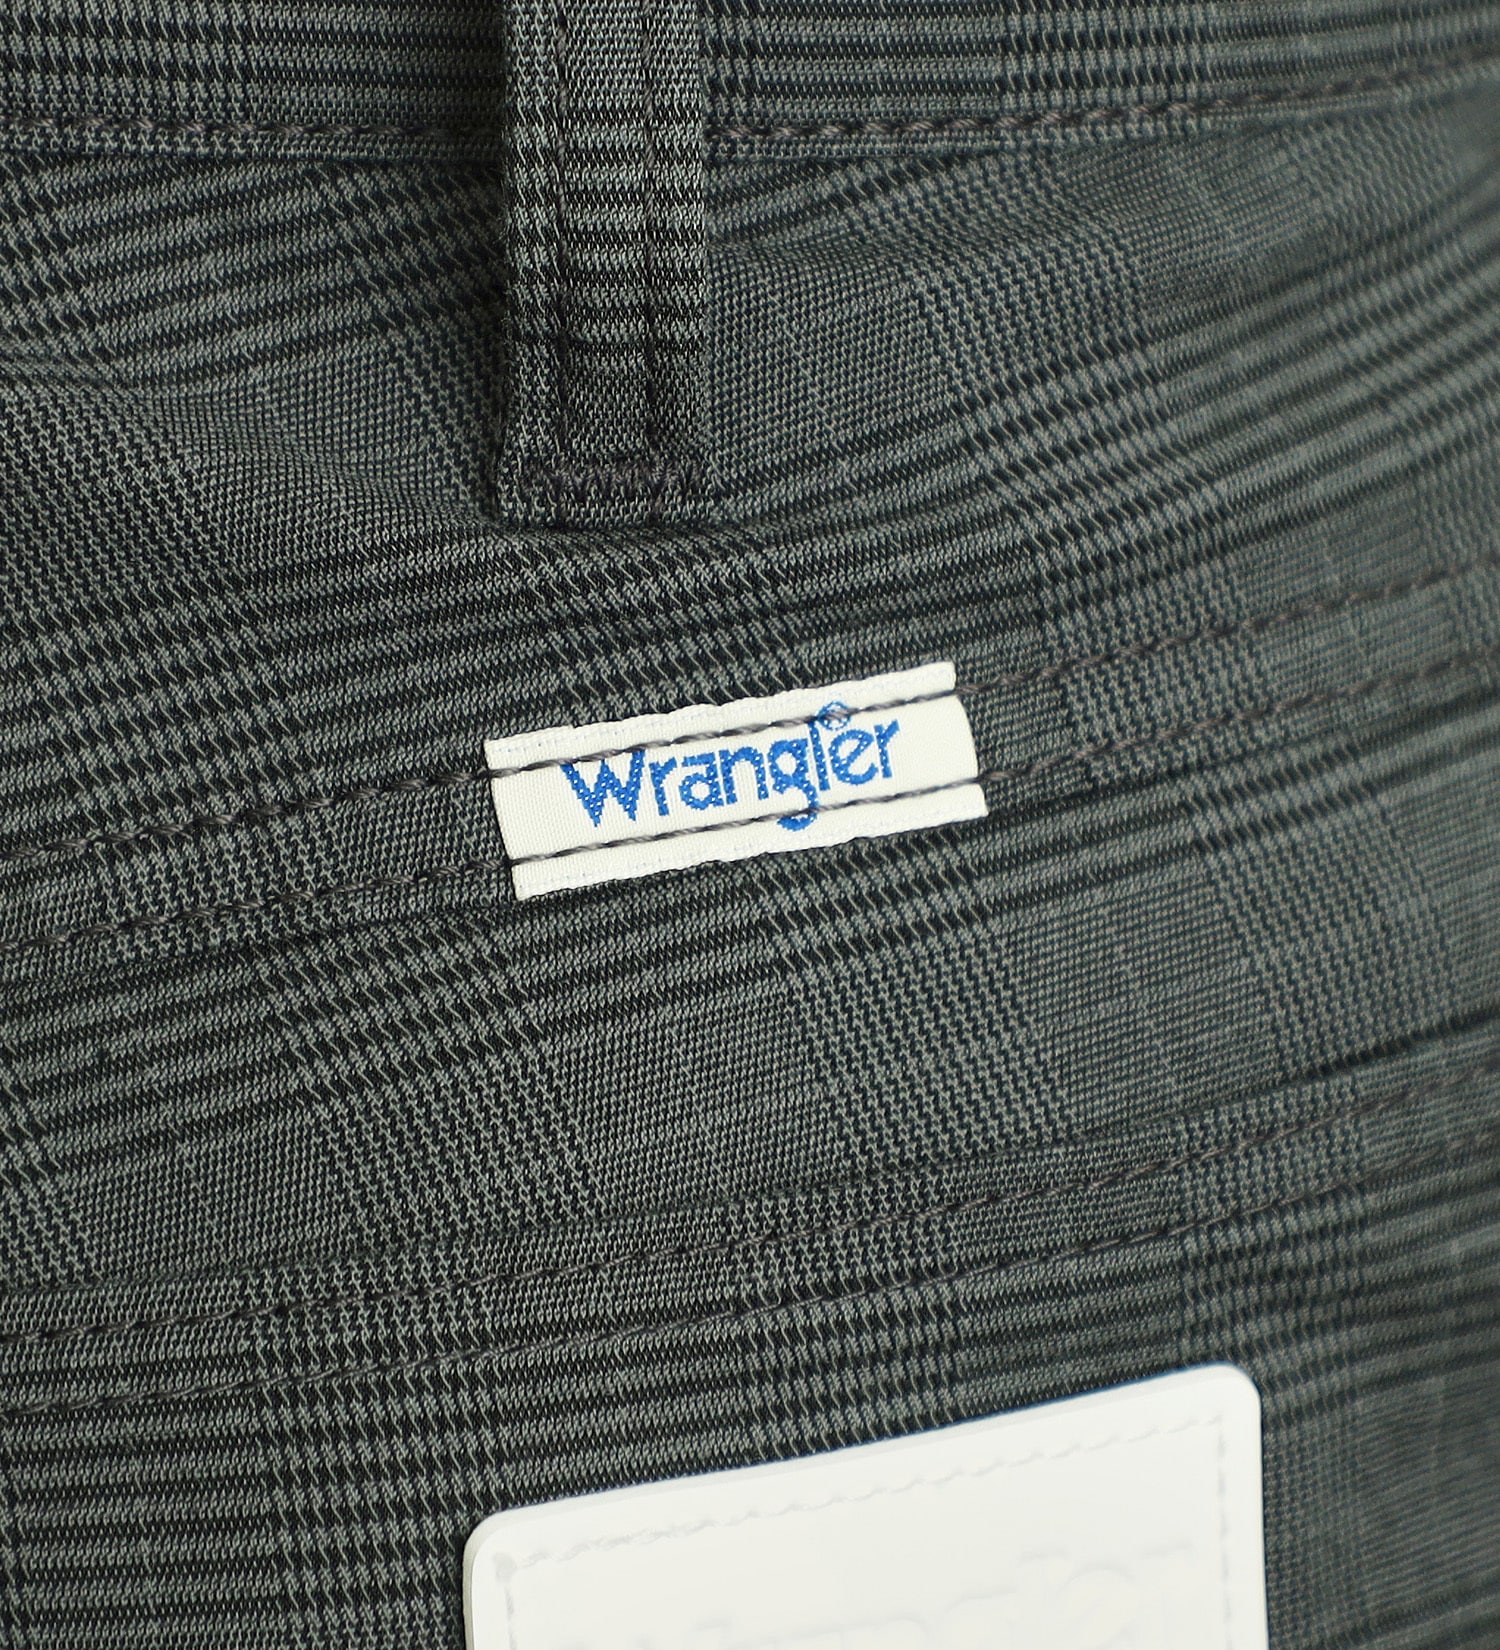 Wrangler(ラングラー)の【涼・COOL】ドライタッチストレートパンツ|パンツ/パンツ/メンズ|チェック1